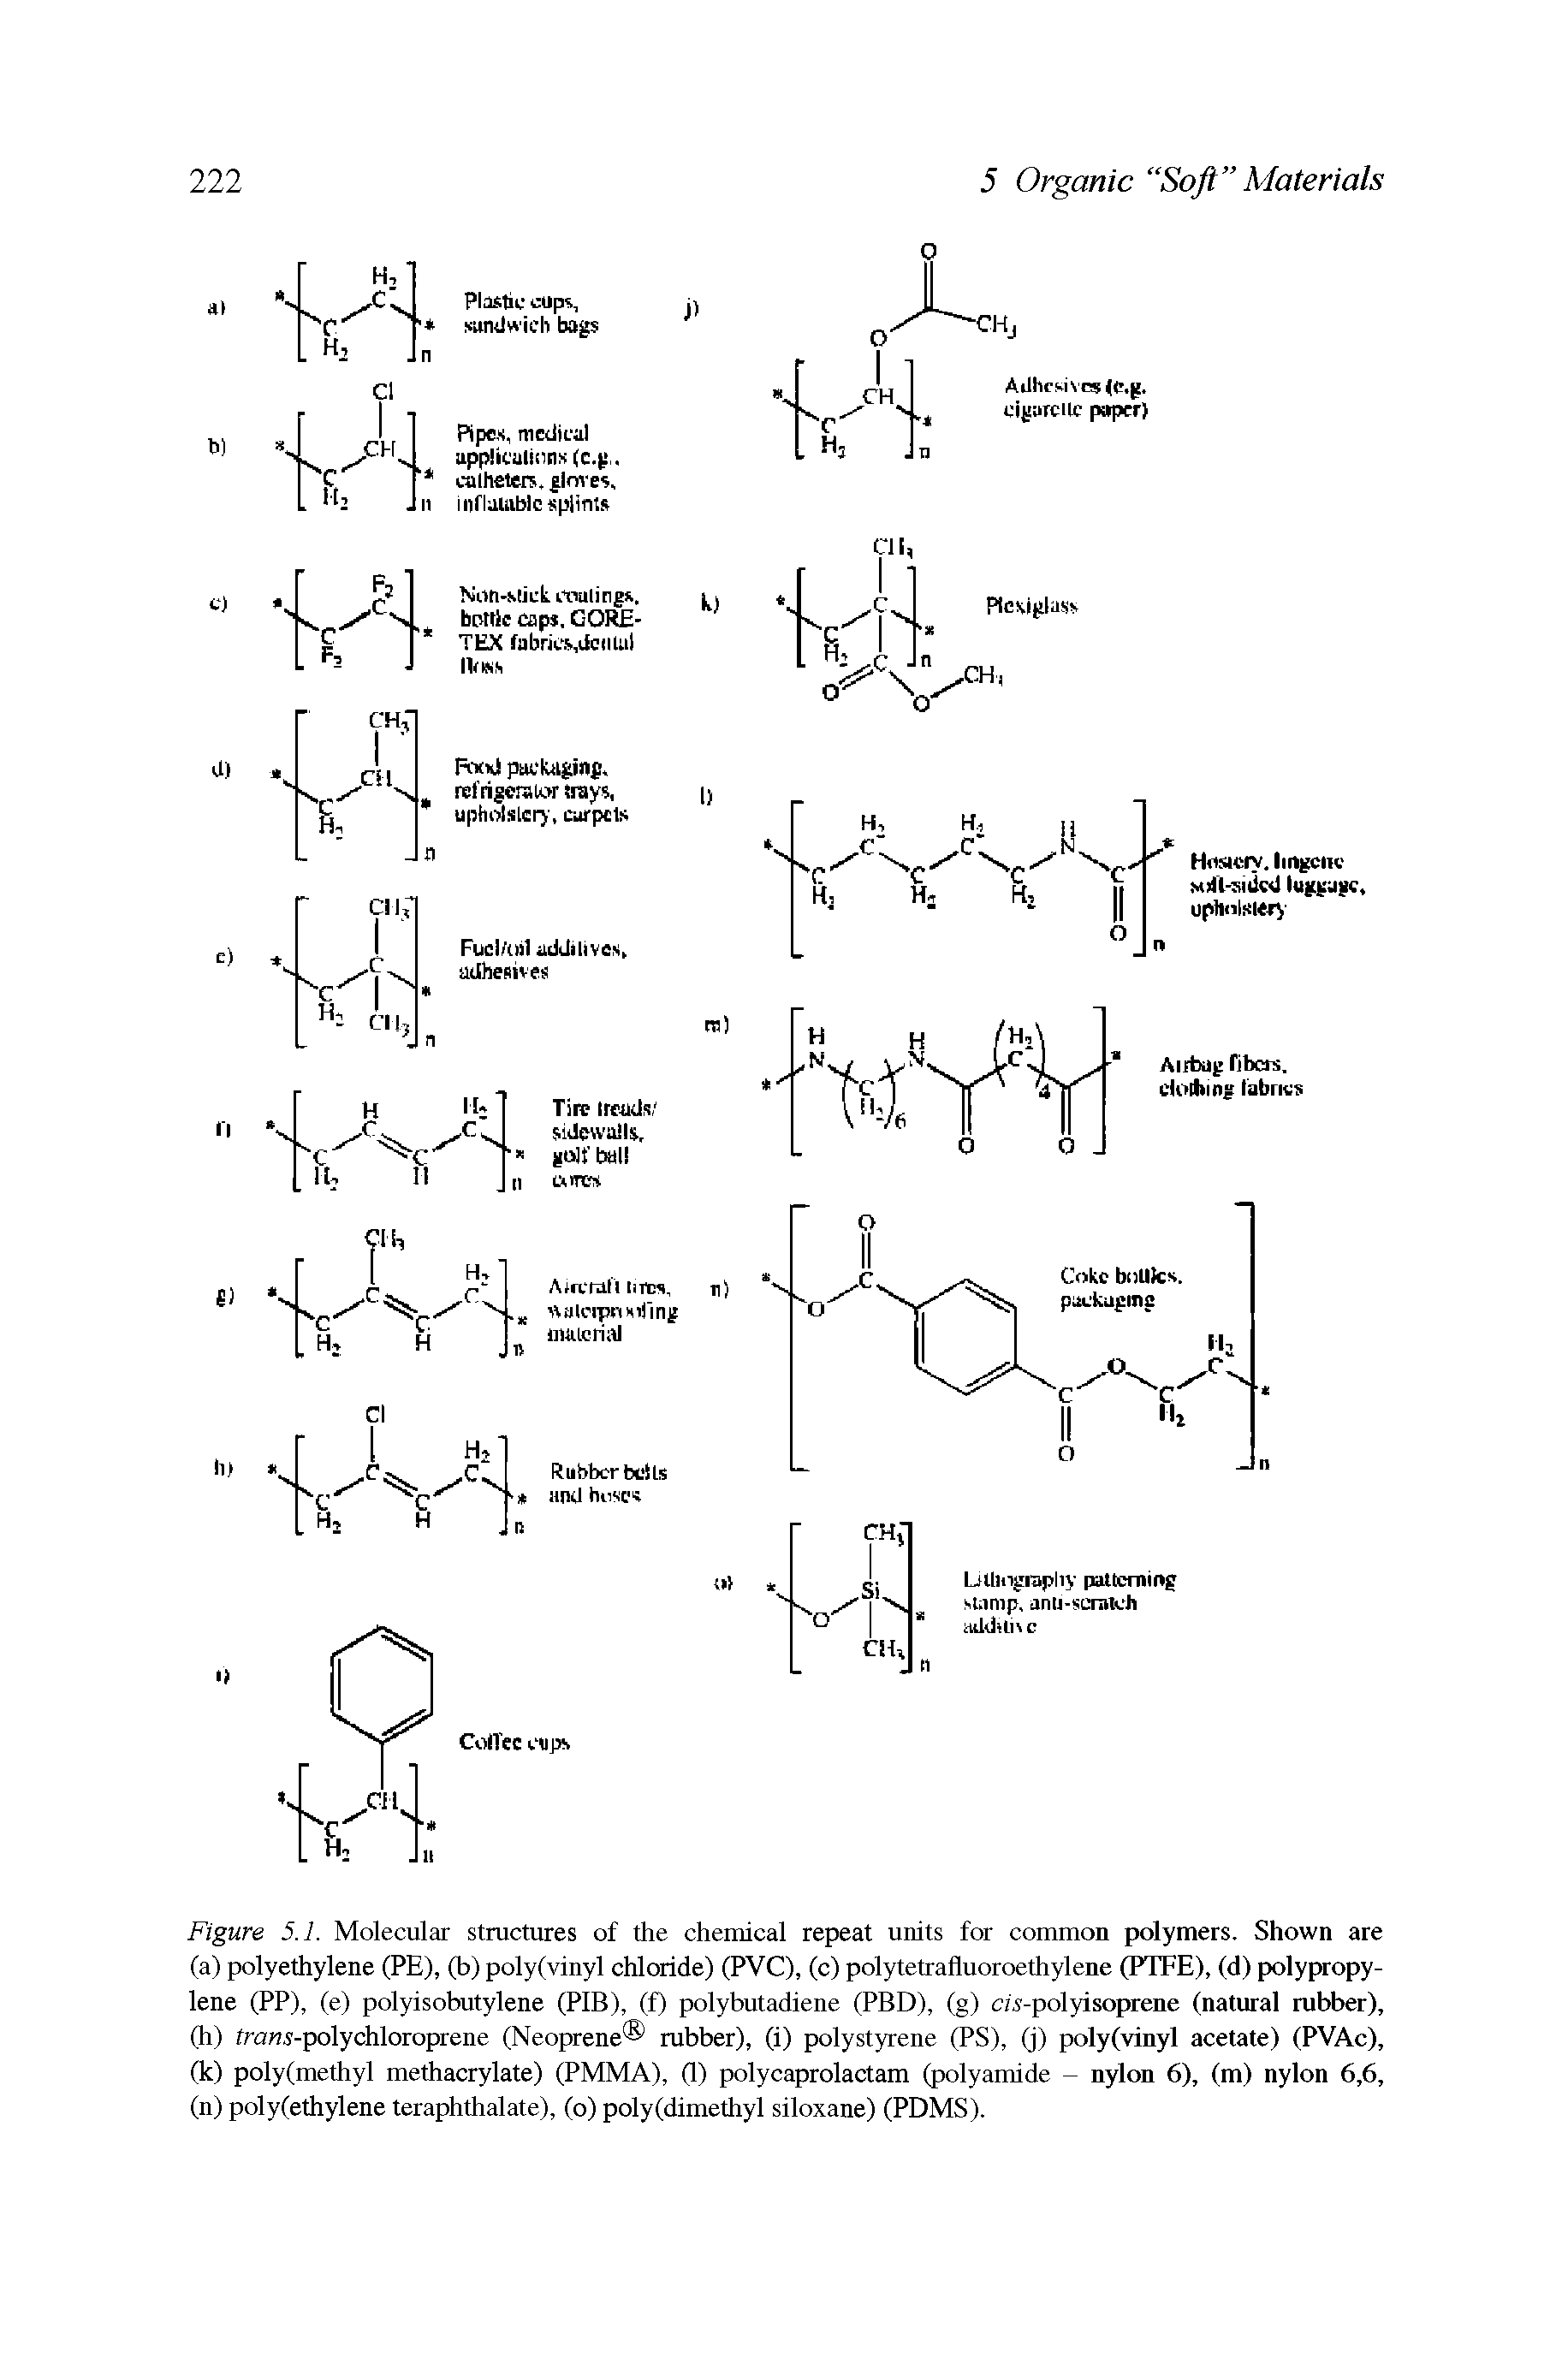 Figure 5.1. Molecular structures of the chemical repeat units for common polymers. Shown are (a) polyethylene (PE), (b) poly(vinyl chloride) (PVC), (c) polytetrafluoroethylene (PTFE), (d) polypropylene (PP), (e) polyisobutylene (PIB), (f) polybutadiene (PBD), (g) c/5-polyisoprene (natural rubber), (h) traw5-polychloroprene (Neoprene rubber), (i) polystyrene (PS), (j) poly(vinyl acetate) (PVAc), (k) poly(methyl methacrylate) (PMMA), ( ) polycaprolactam (polyamide - nylon 6), (m) nylon 6,6, (n) poly(ethylene teraphthalate), (o) poly(dimethyl siloxane) (PDMS).